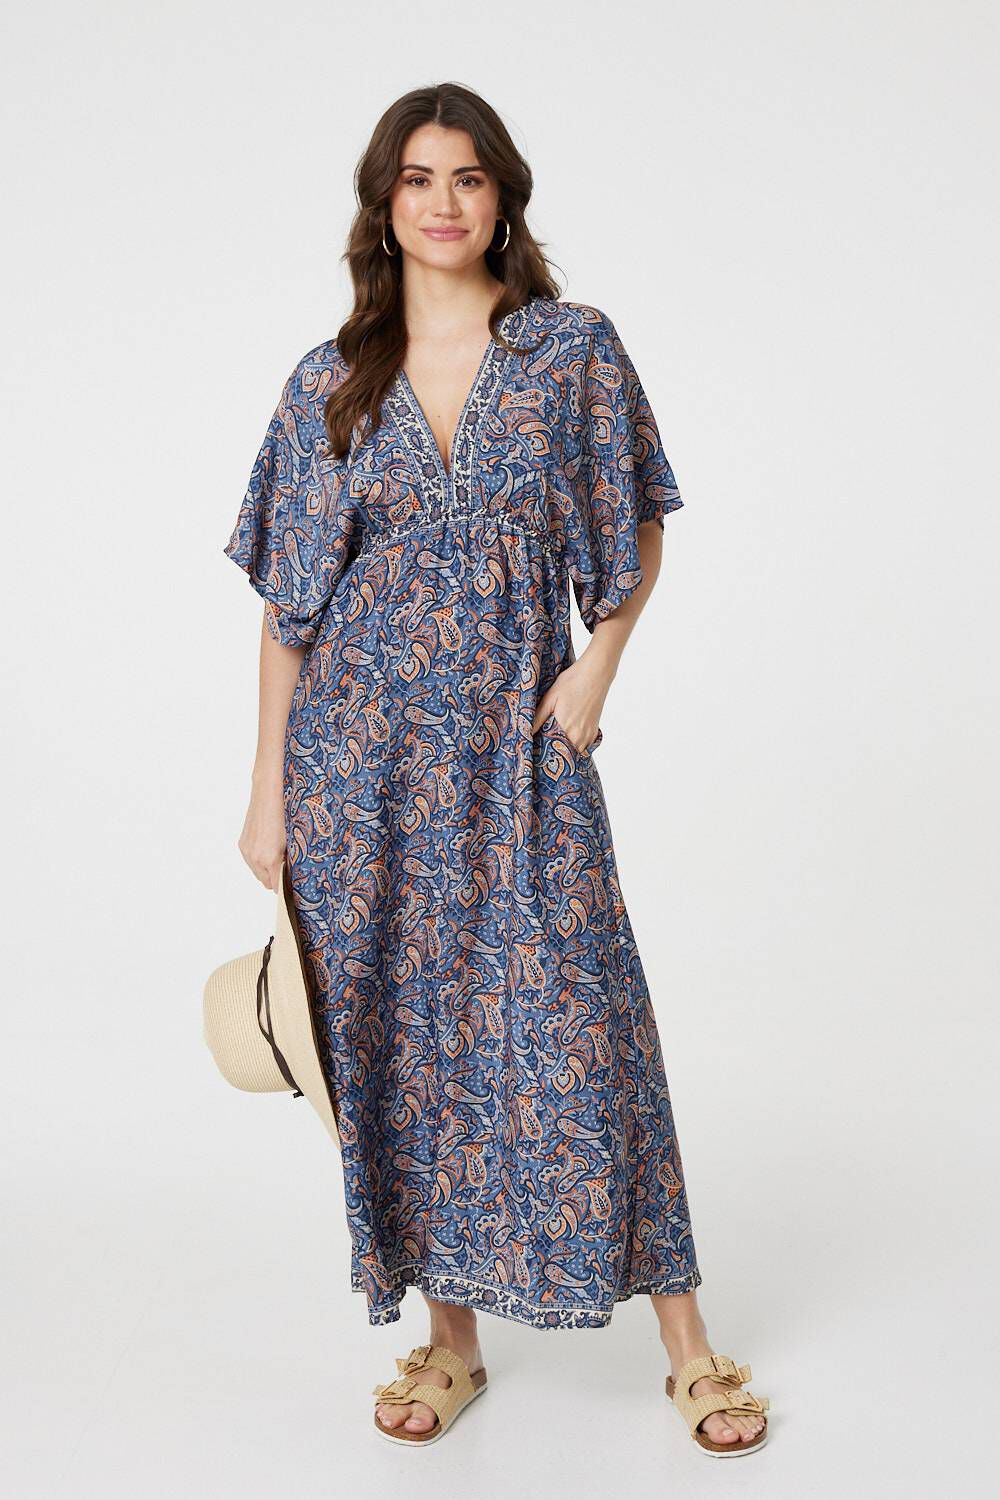 Izabel London Navy - Paisley Print Kimono Sleeve Midi Dress, Size: 14